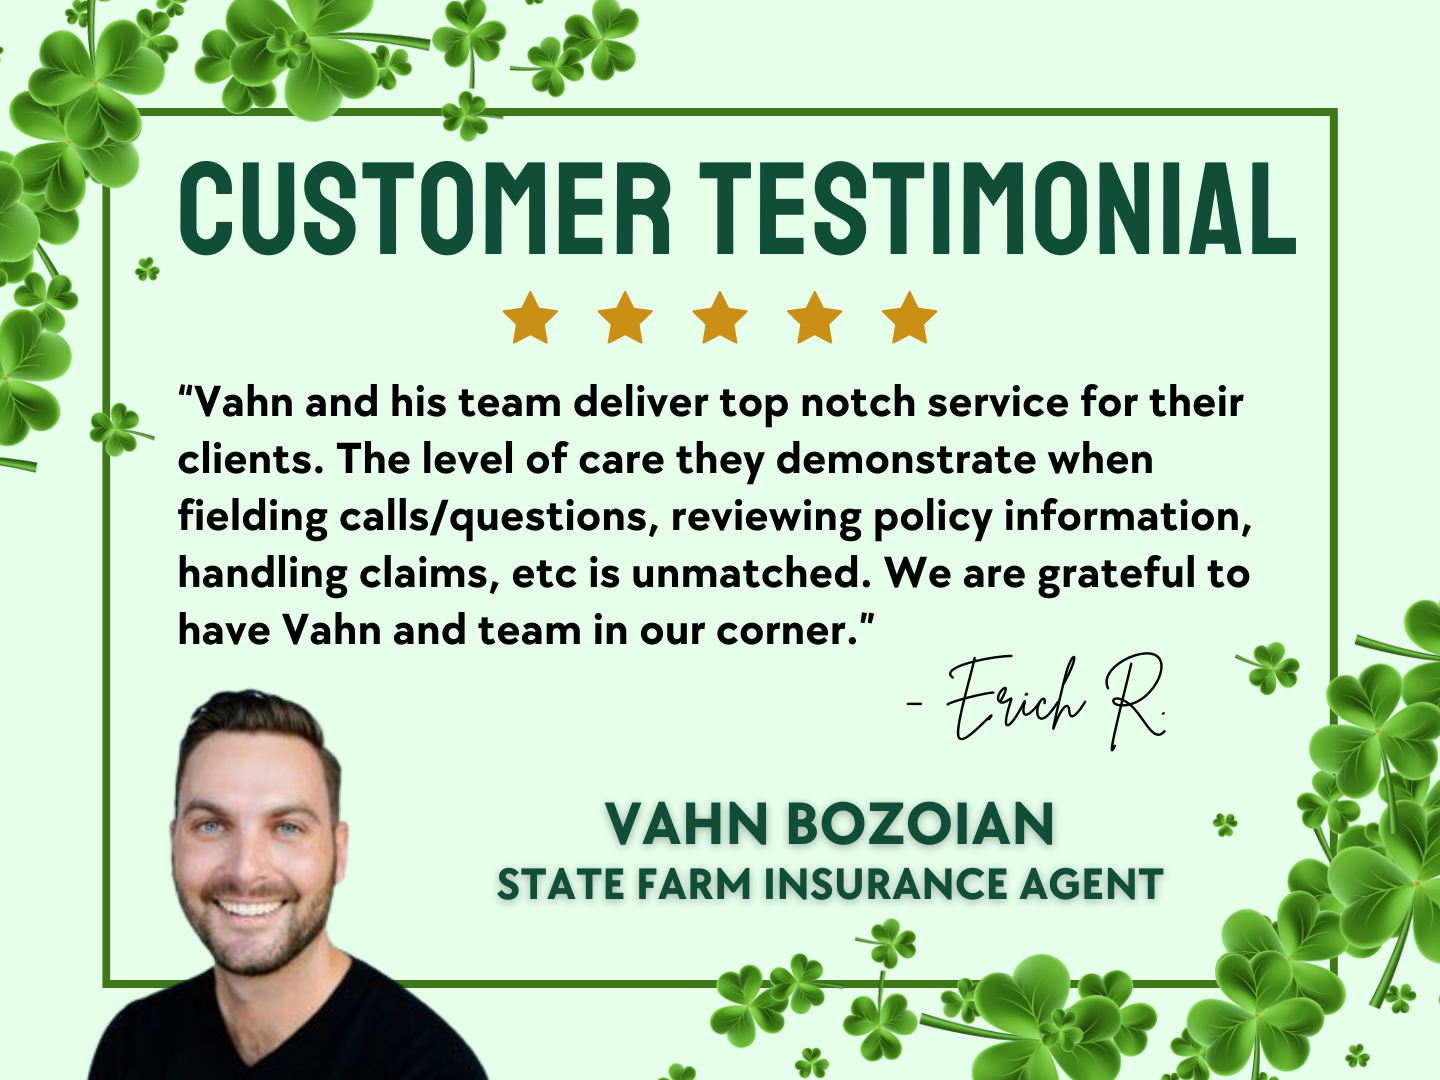 Thank you for the 5 star review! Vahn Bozoian - State Farm Insurance Agent Phoenix (480)648-2928